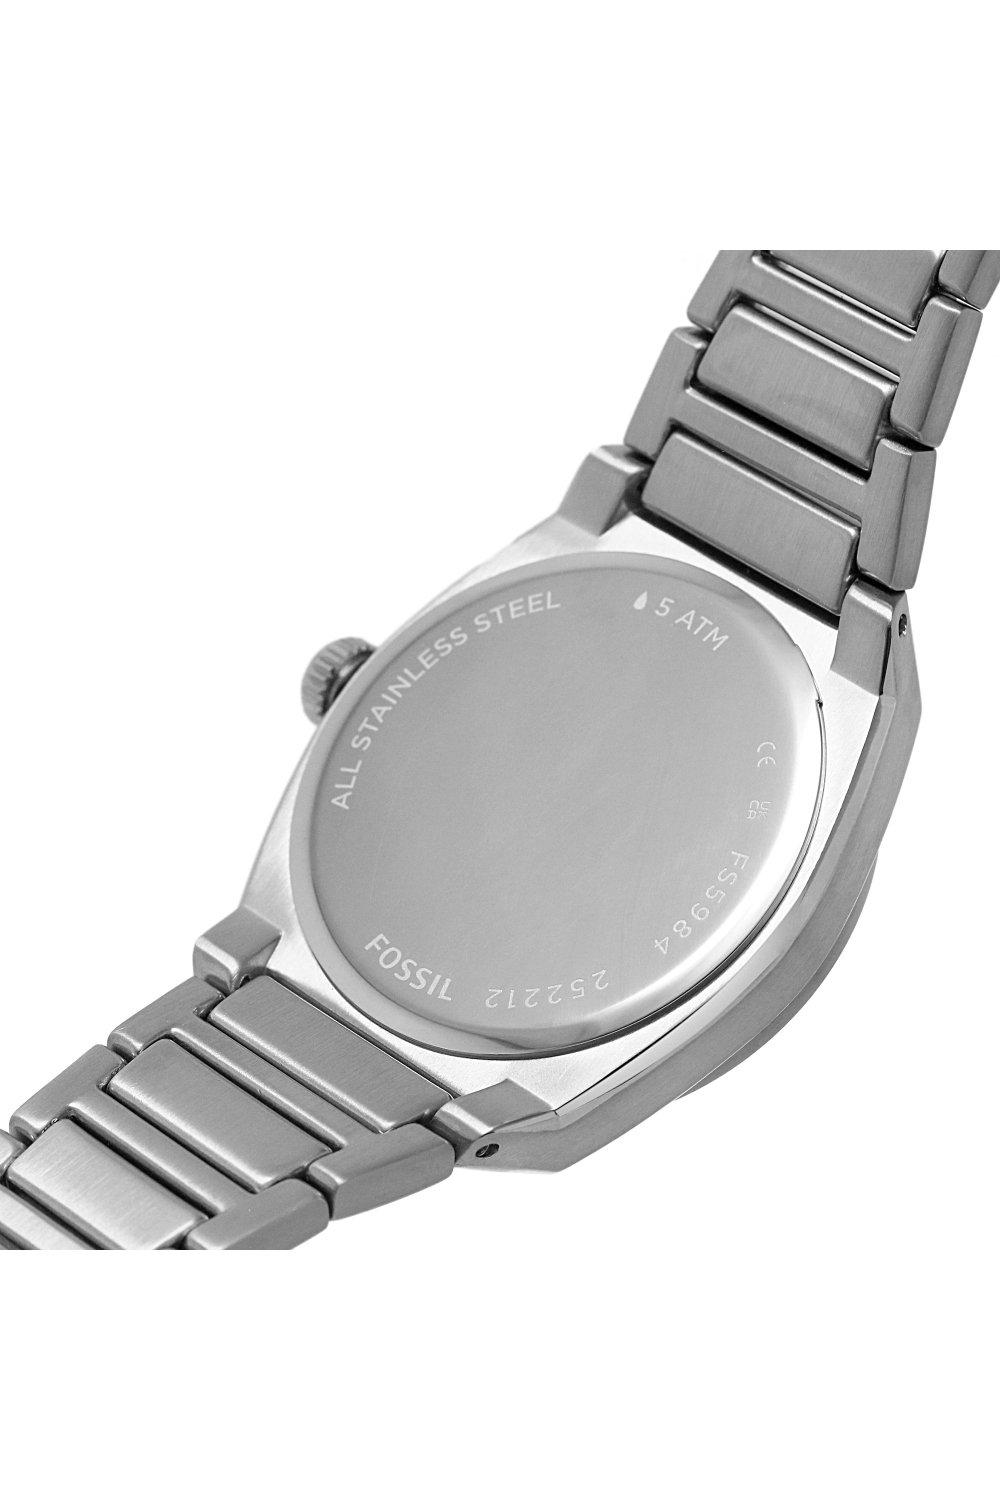 Watches | Everett Stainless Steel Fashion Analogue Quartz Watch - Fs5984 |  Fossil